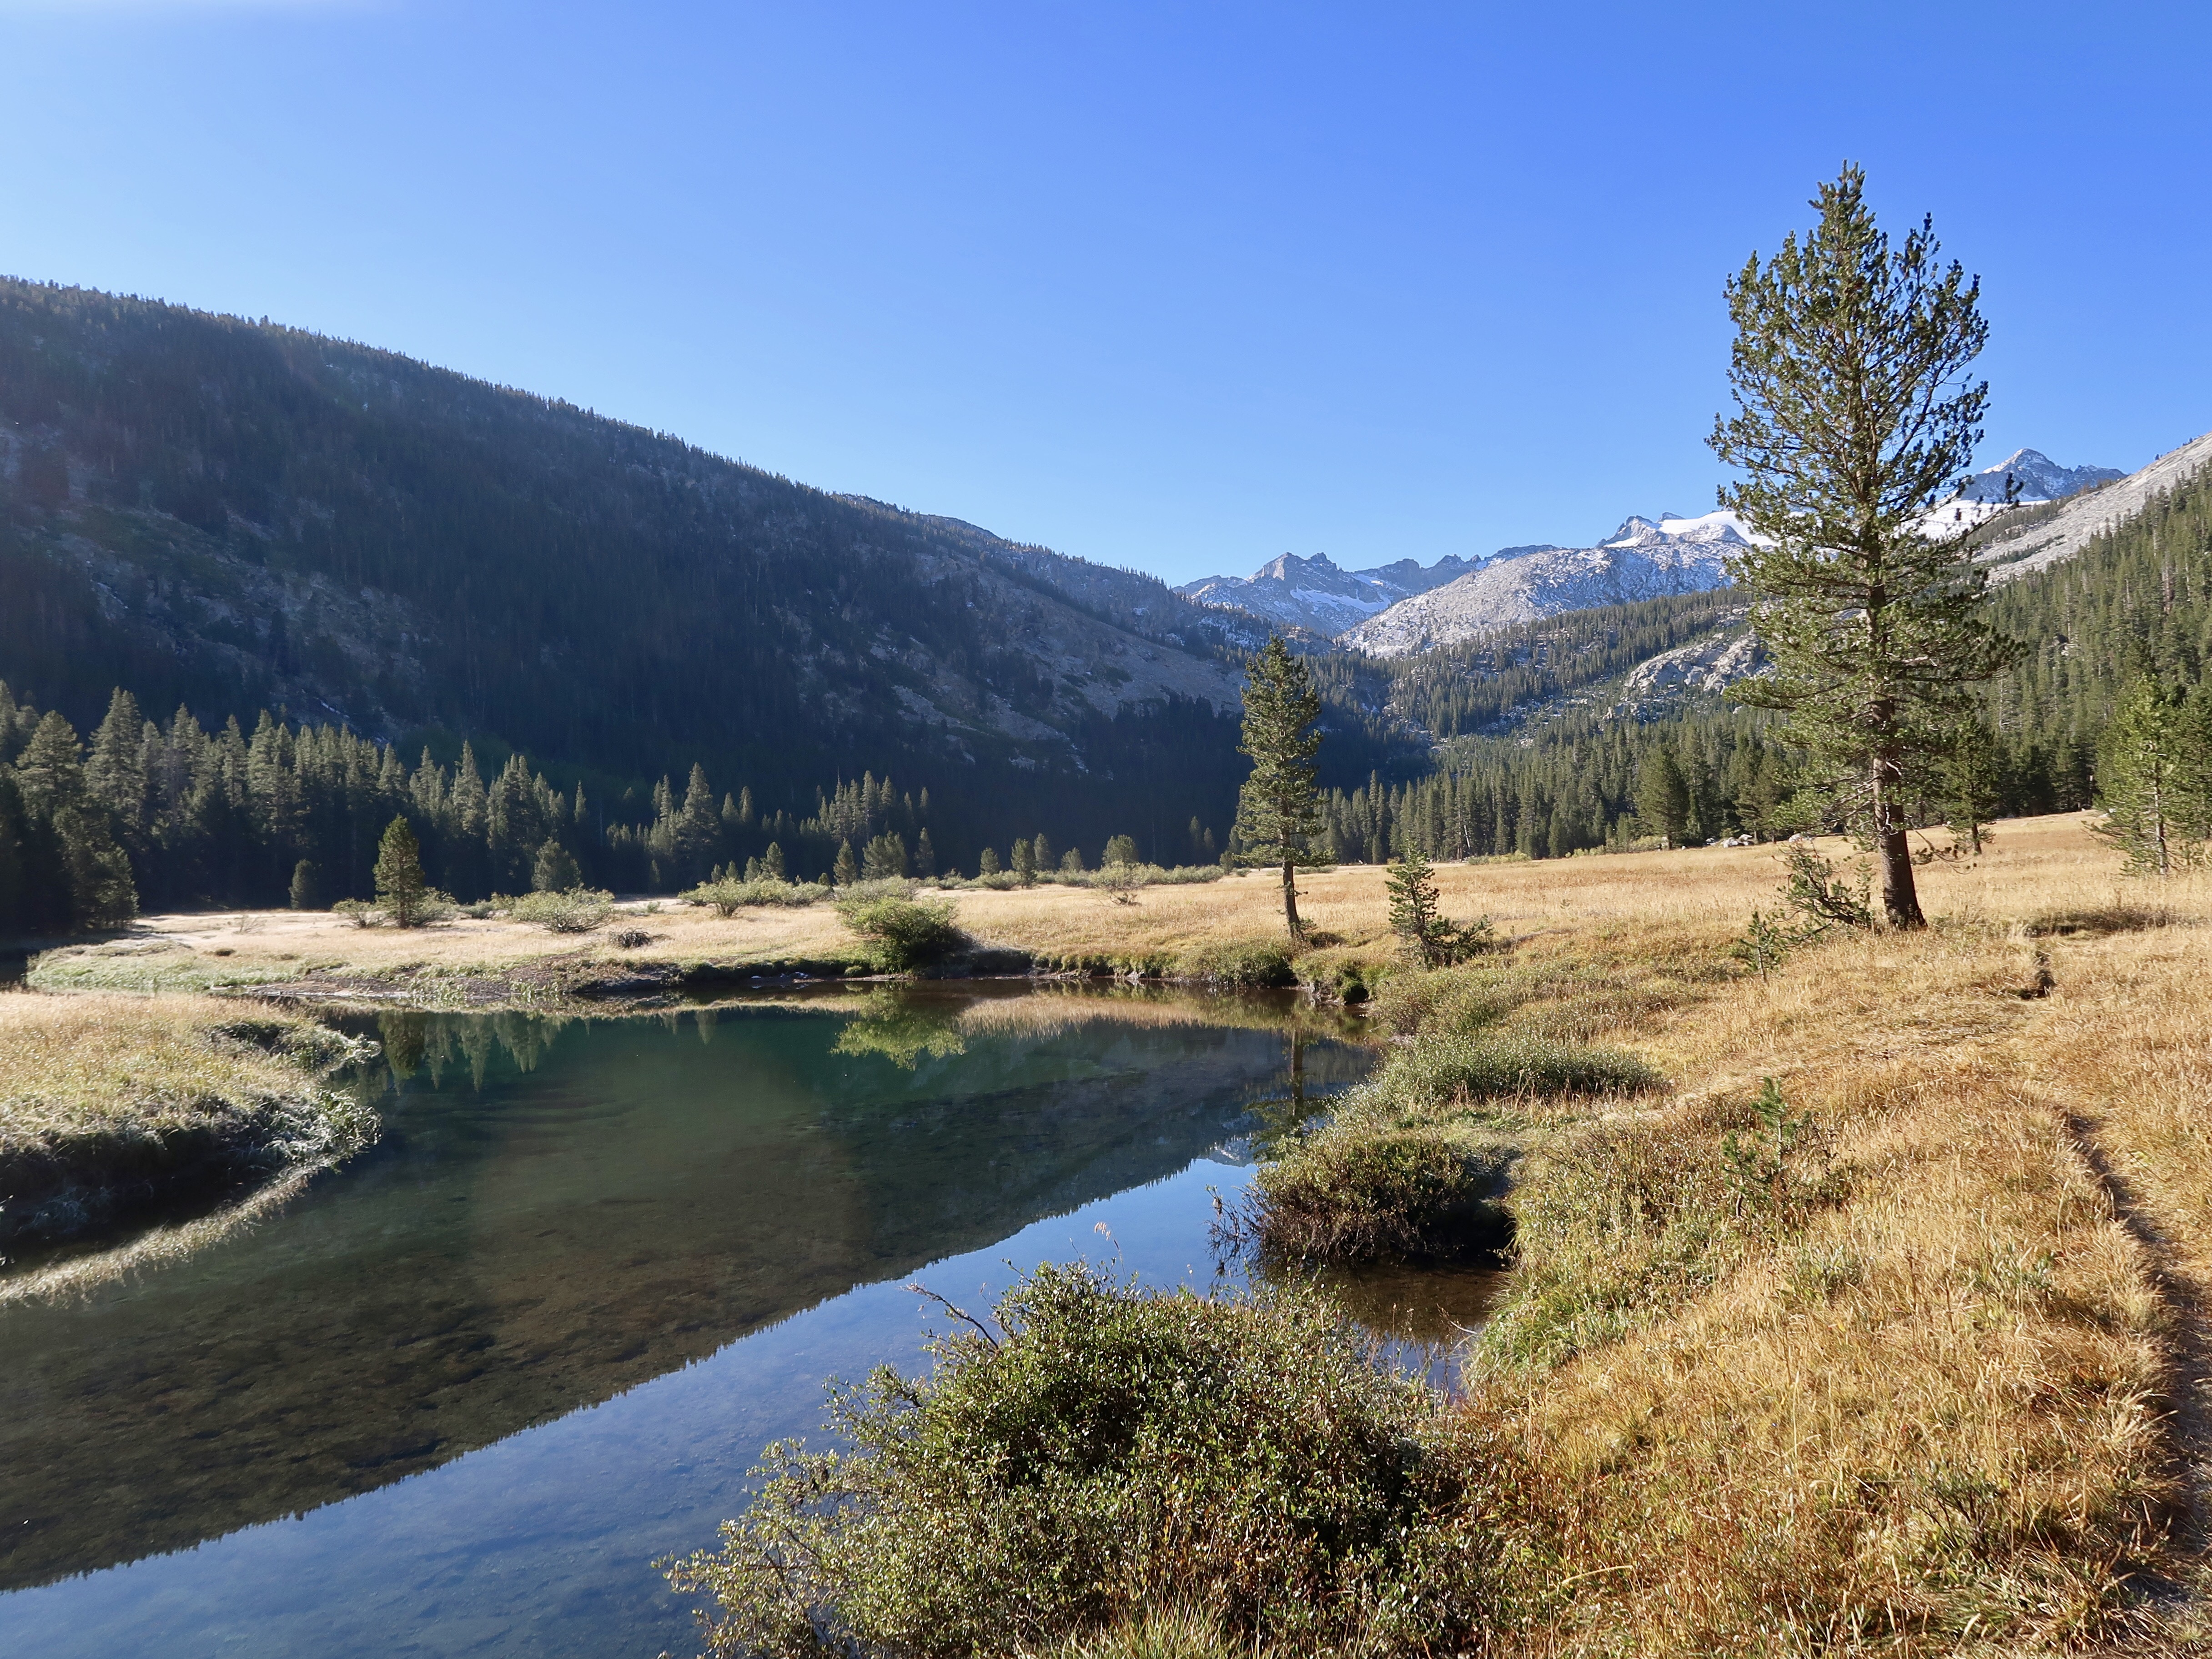 PCT Day 168 – Ending My PCT Hike at Yosemite National Park